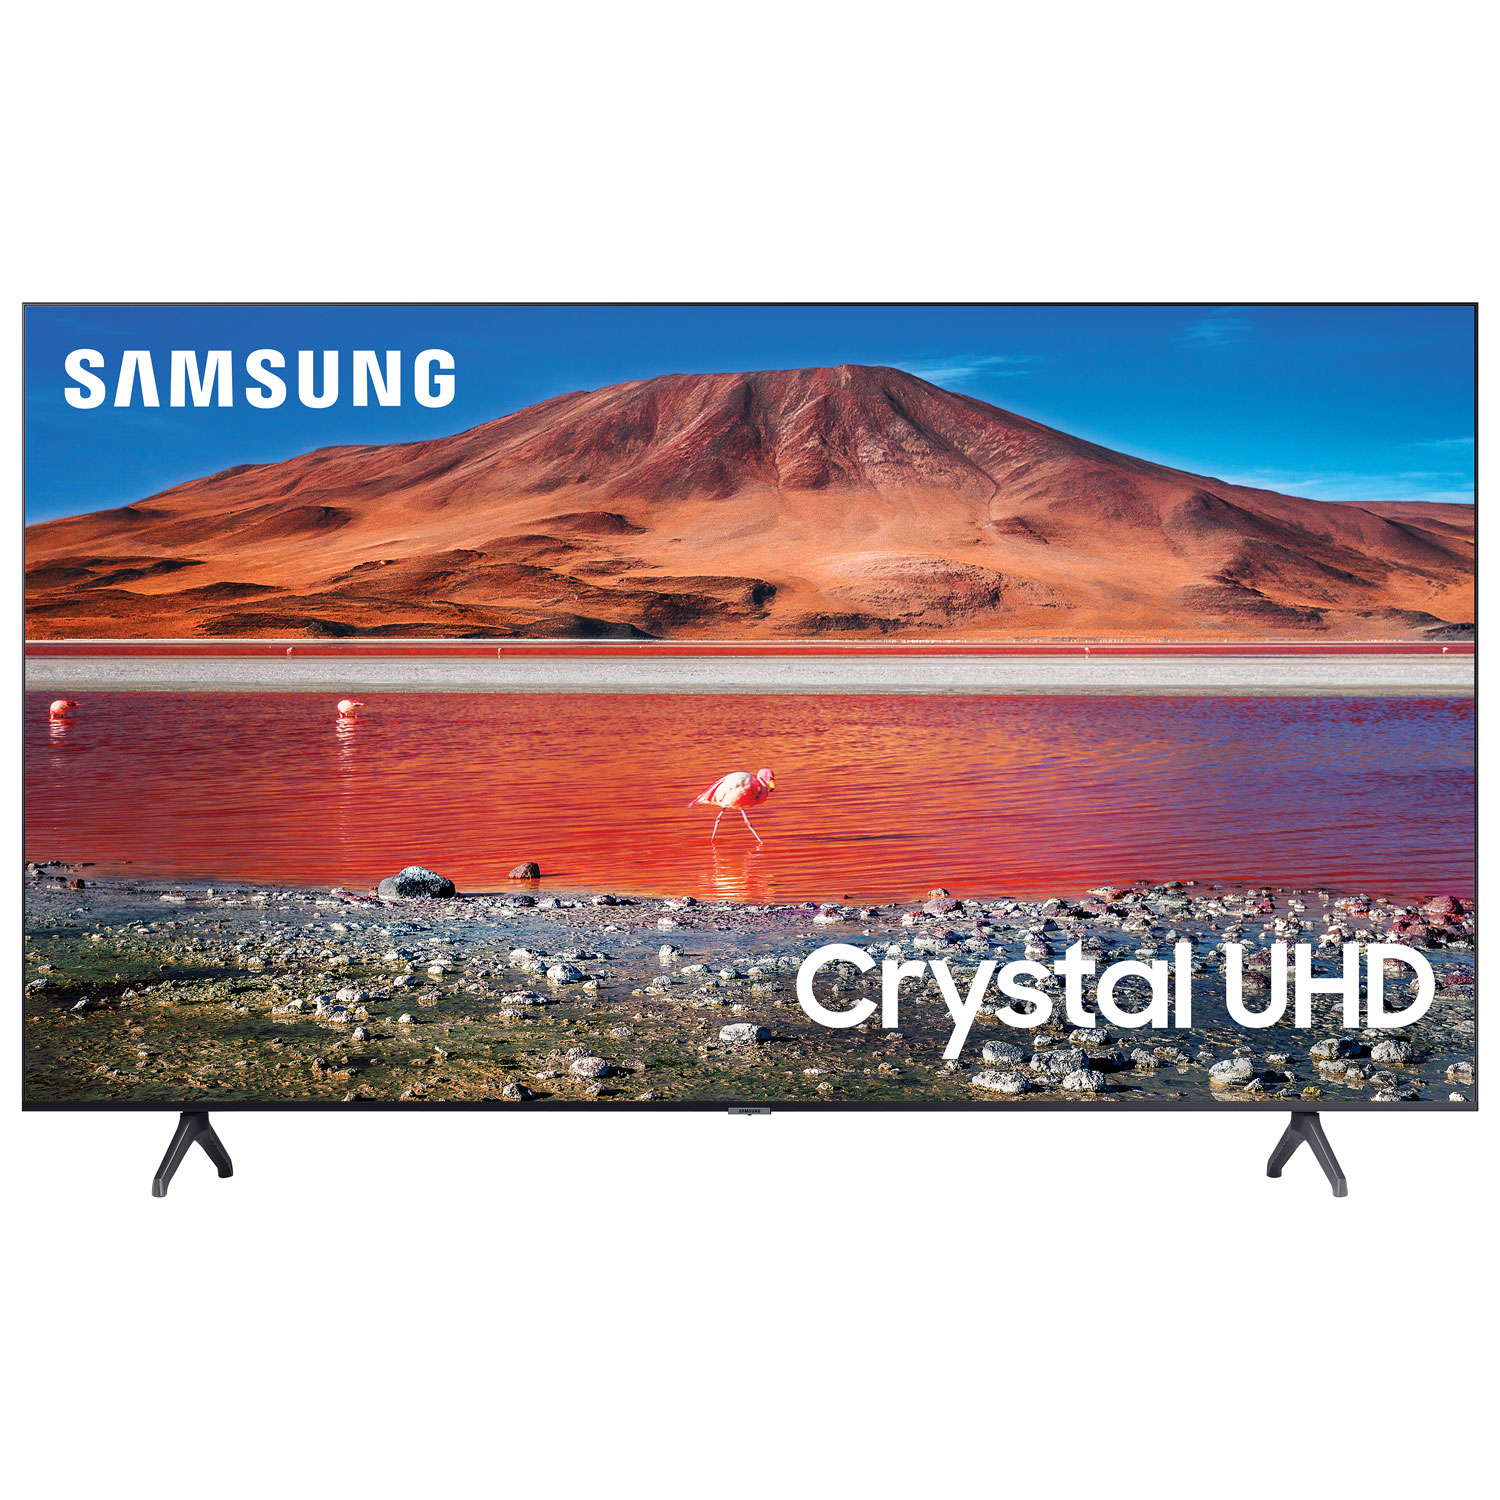 Samsung 82" 4K UHD HDR LED Tizen OS Smart TV (UN82TU7000FXZC) - 2021 - Titan Grey